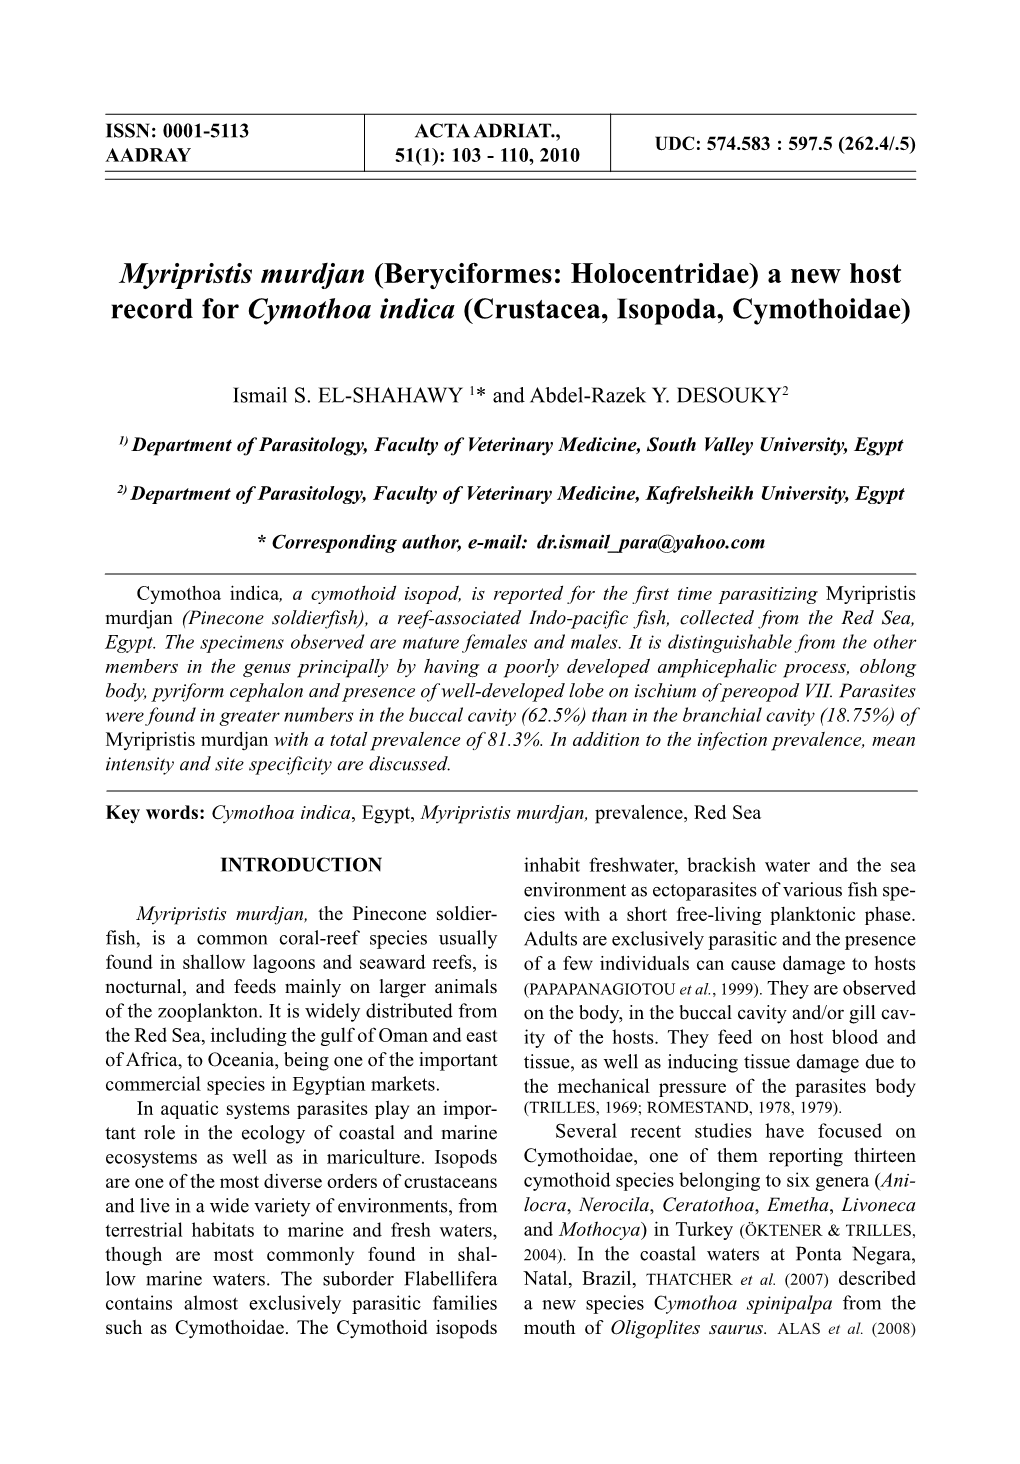 Myripristis Murdjan (Beryciformes: Holocentridae) a New Host Record for Cymothoa Indica (Crustacea, Isopoda, Cymothoidae)